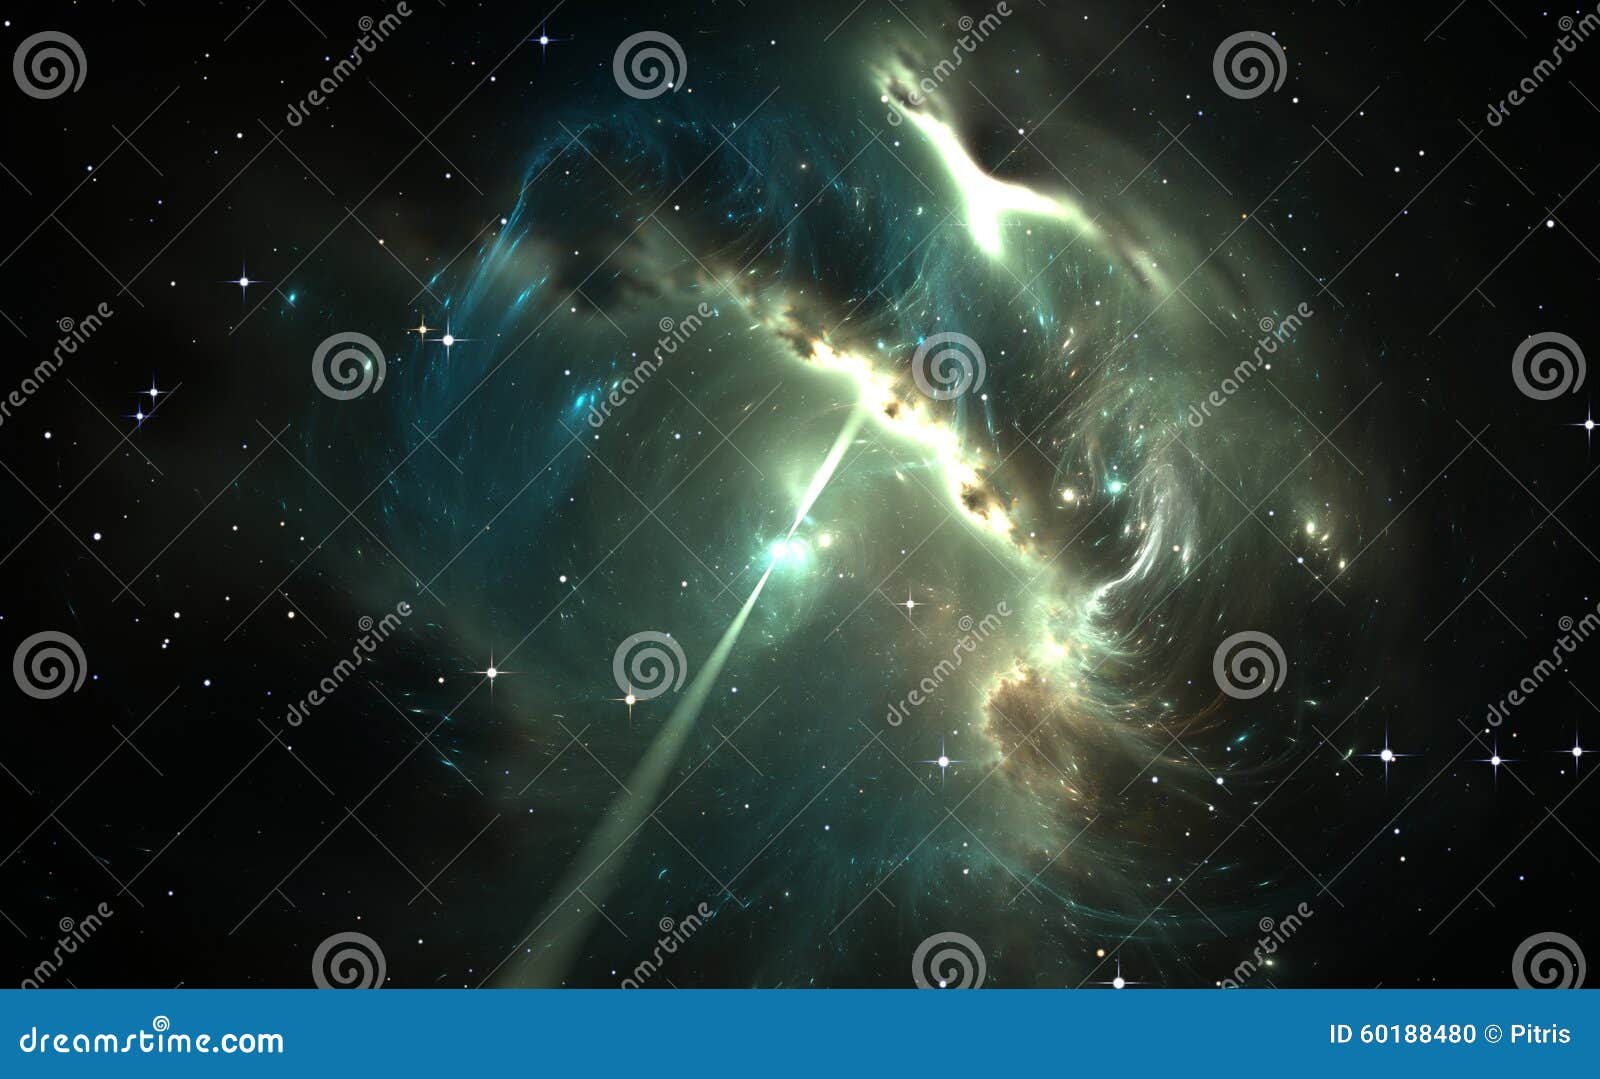 pulsar in the nebula